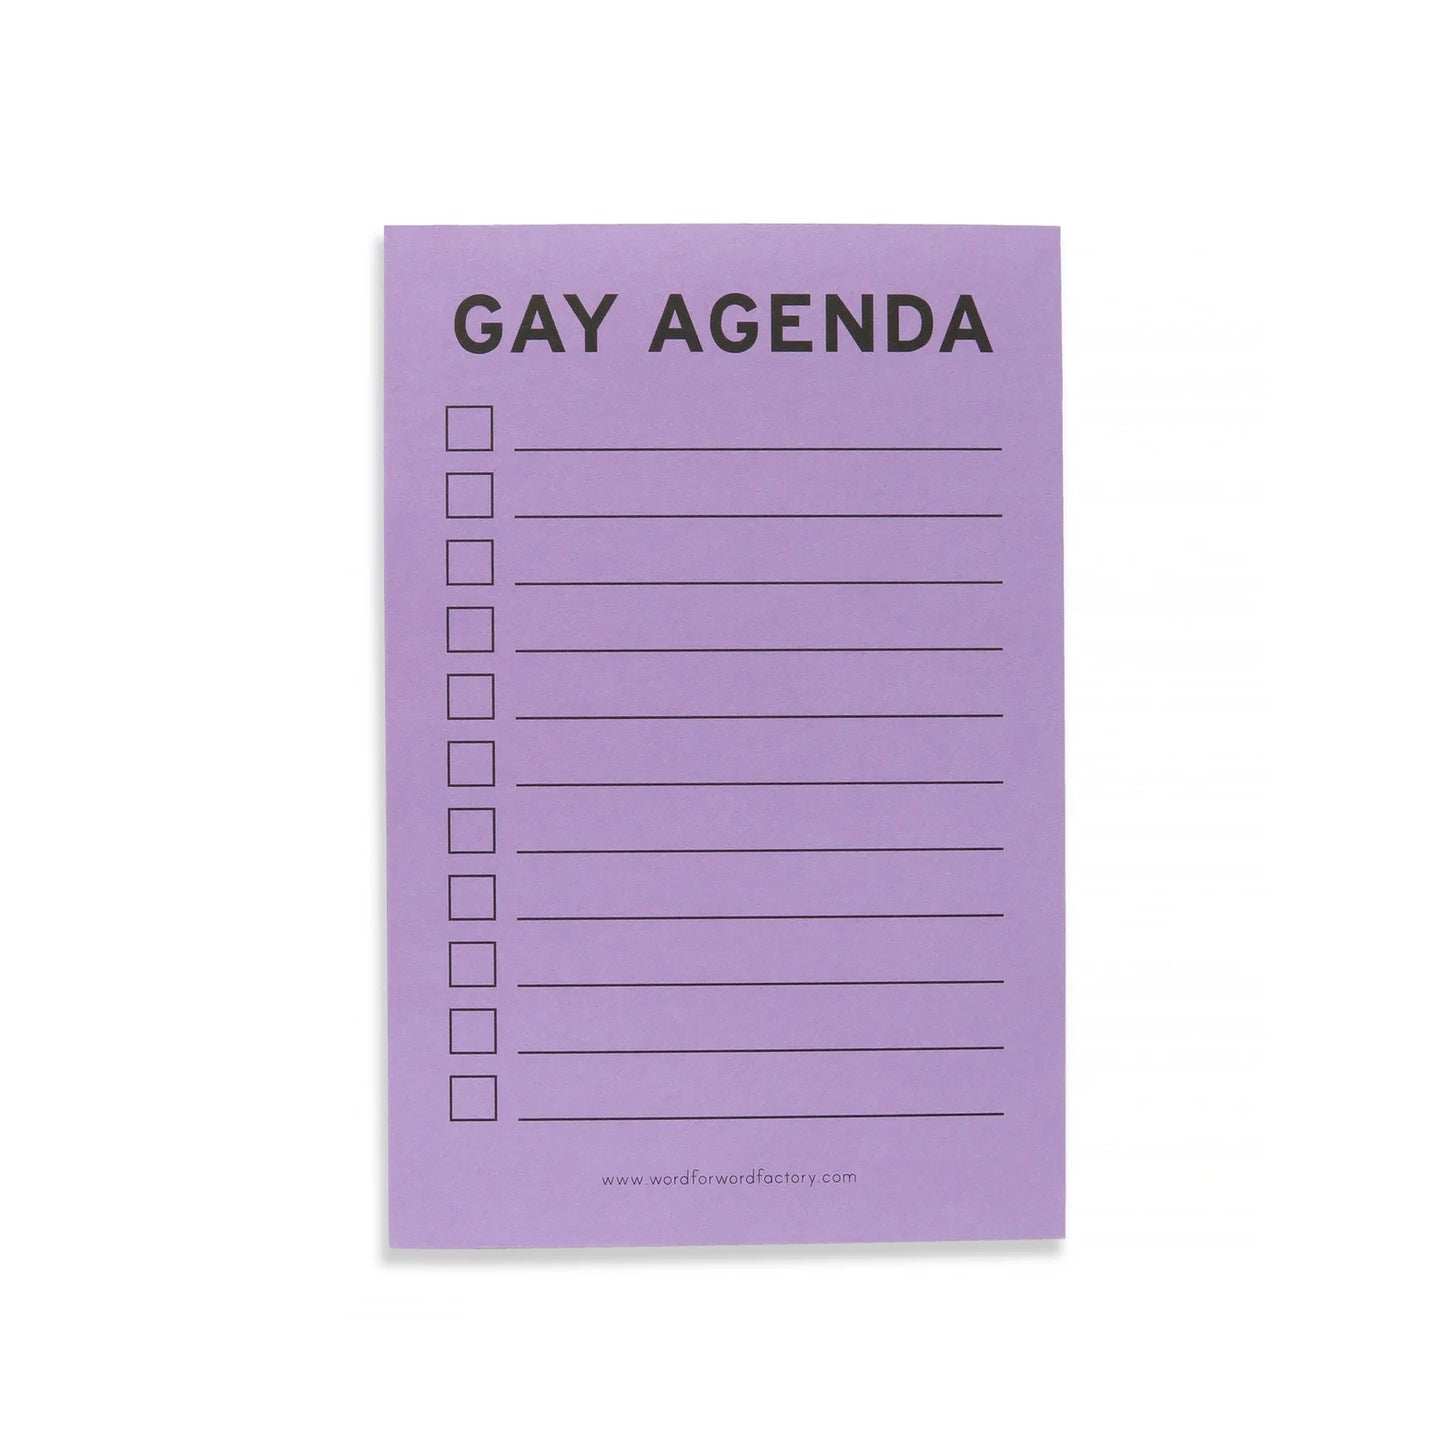 GAY AGENDA Notepad To-Do List Checklist